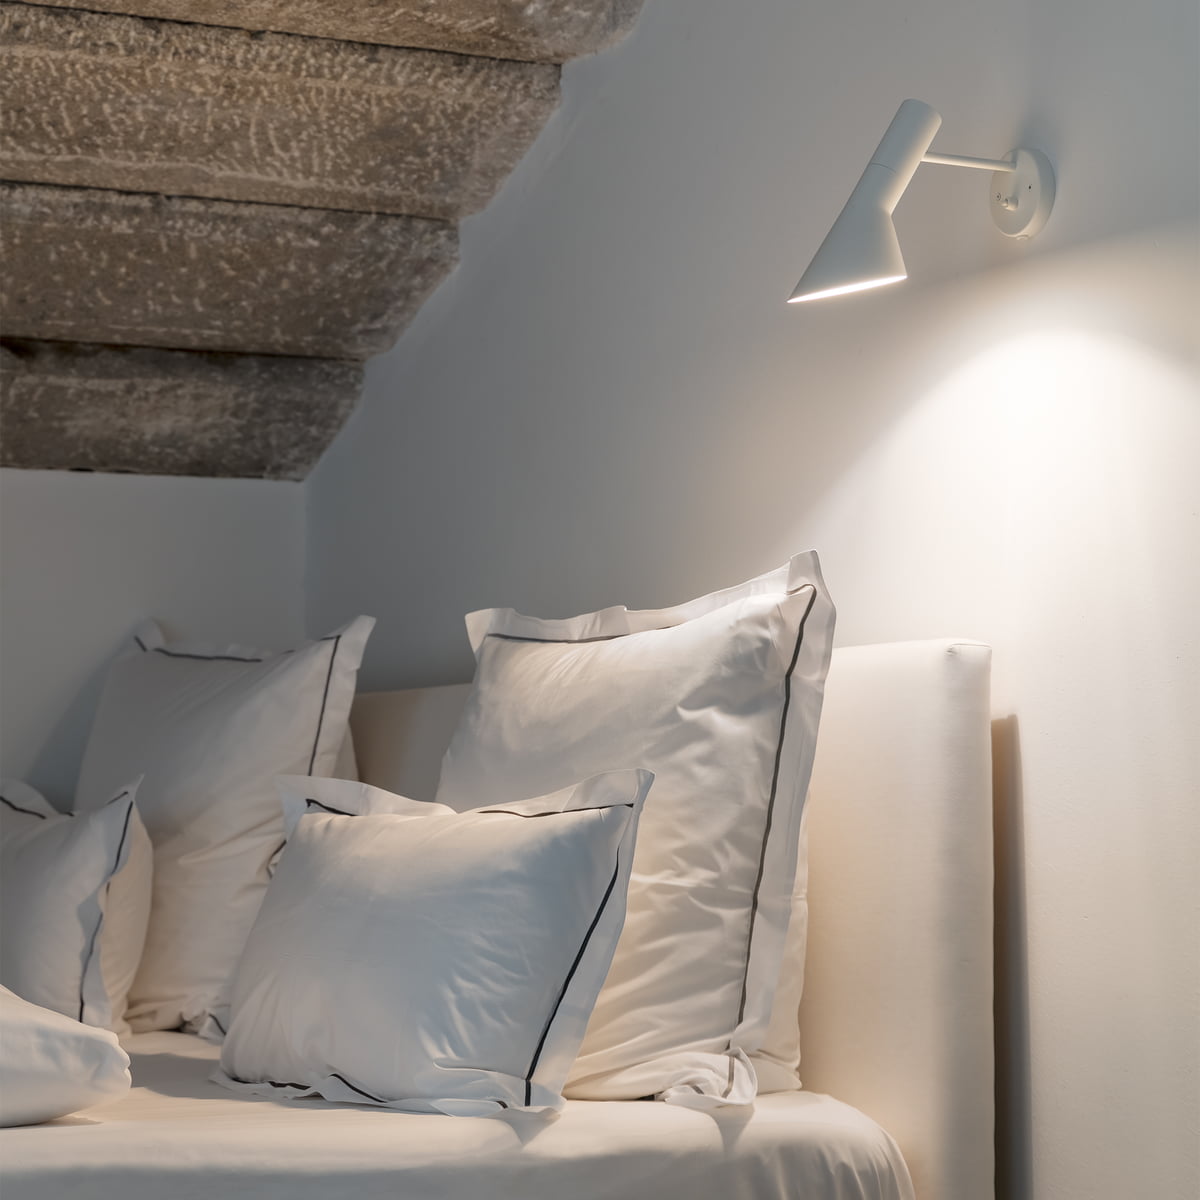 Louis Poulsen Arne Jacobsen AJ Wall Light Cafe Aisle Hall Project Lamp Bedroom 